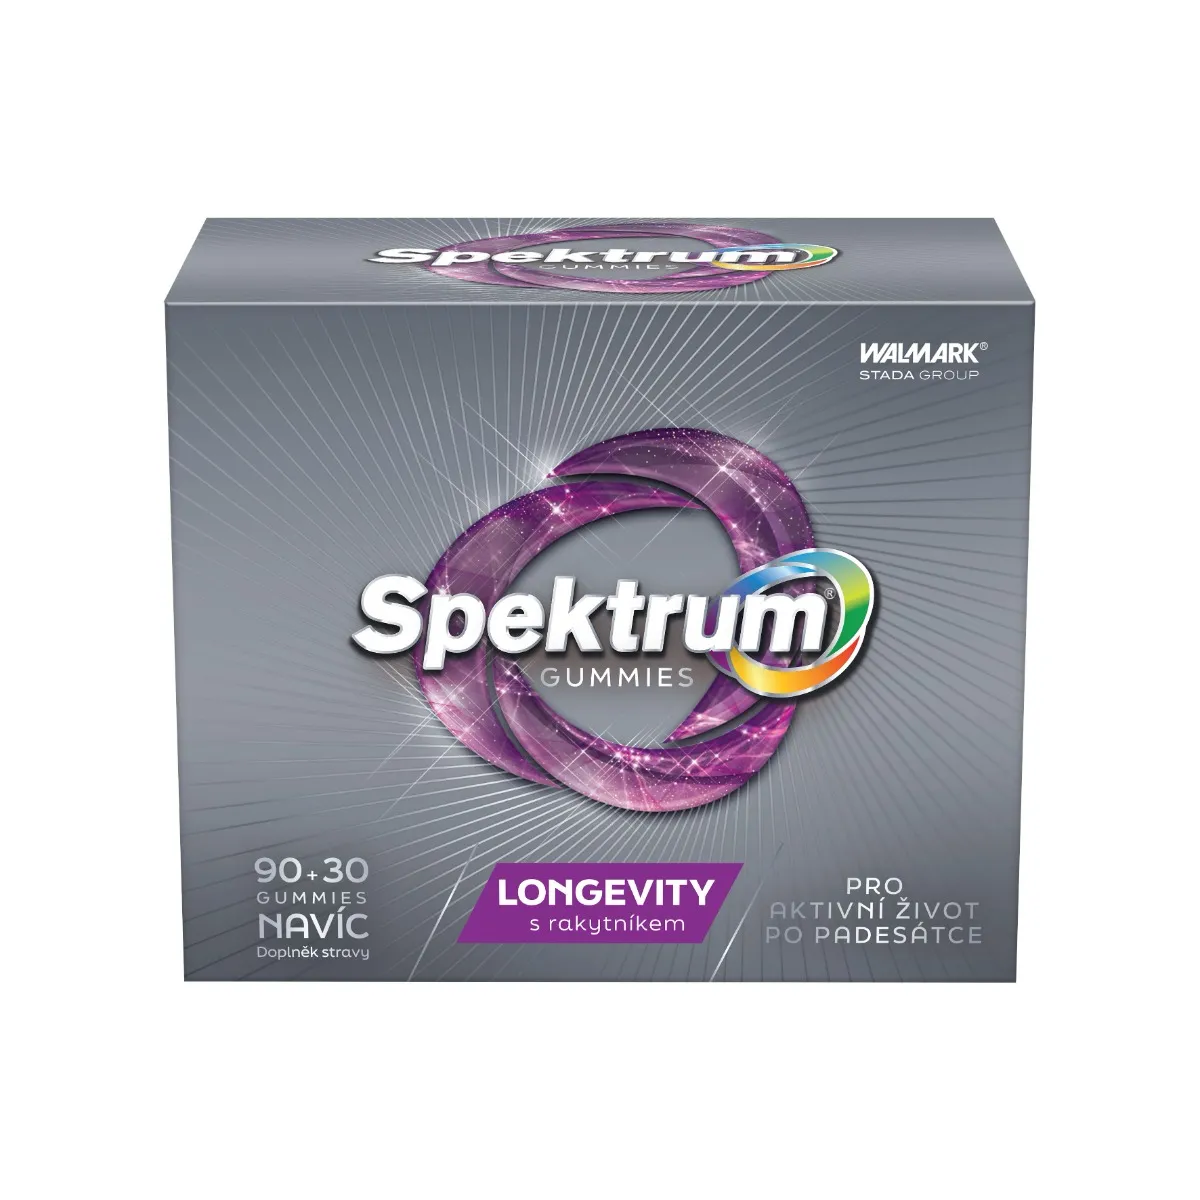 Spektrum Gummies Longevity 90+30 tablet